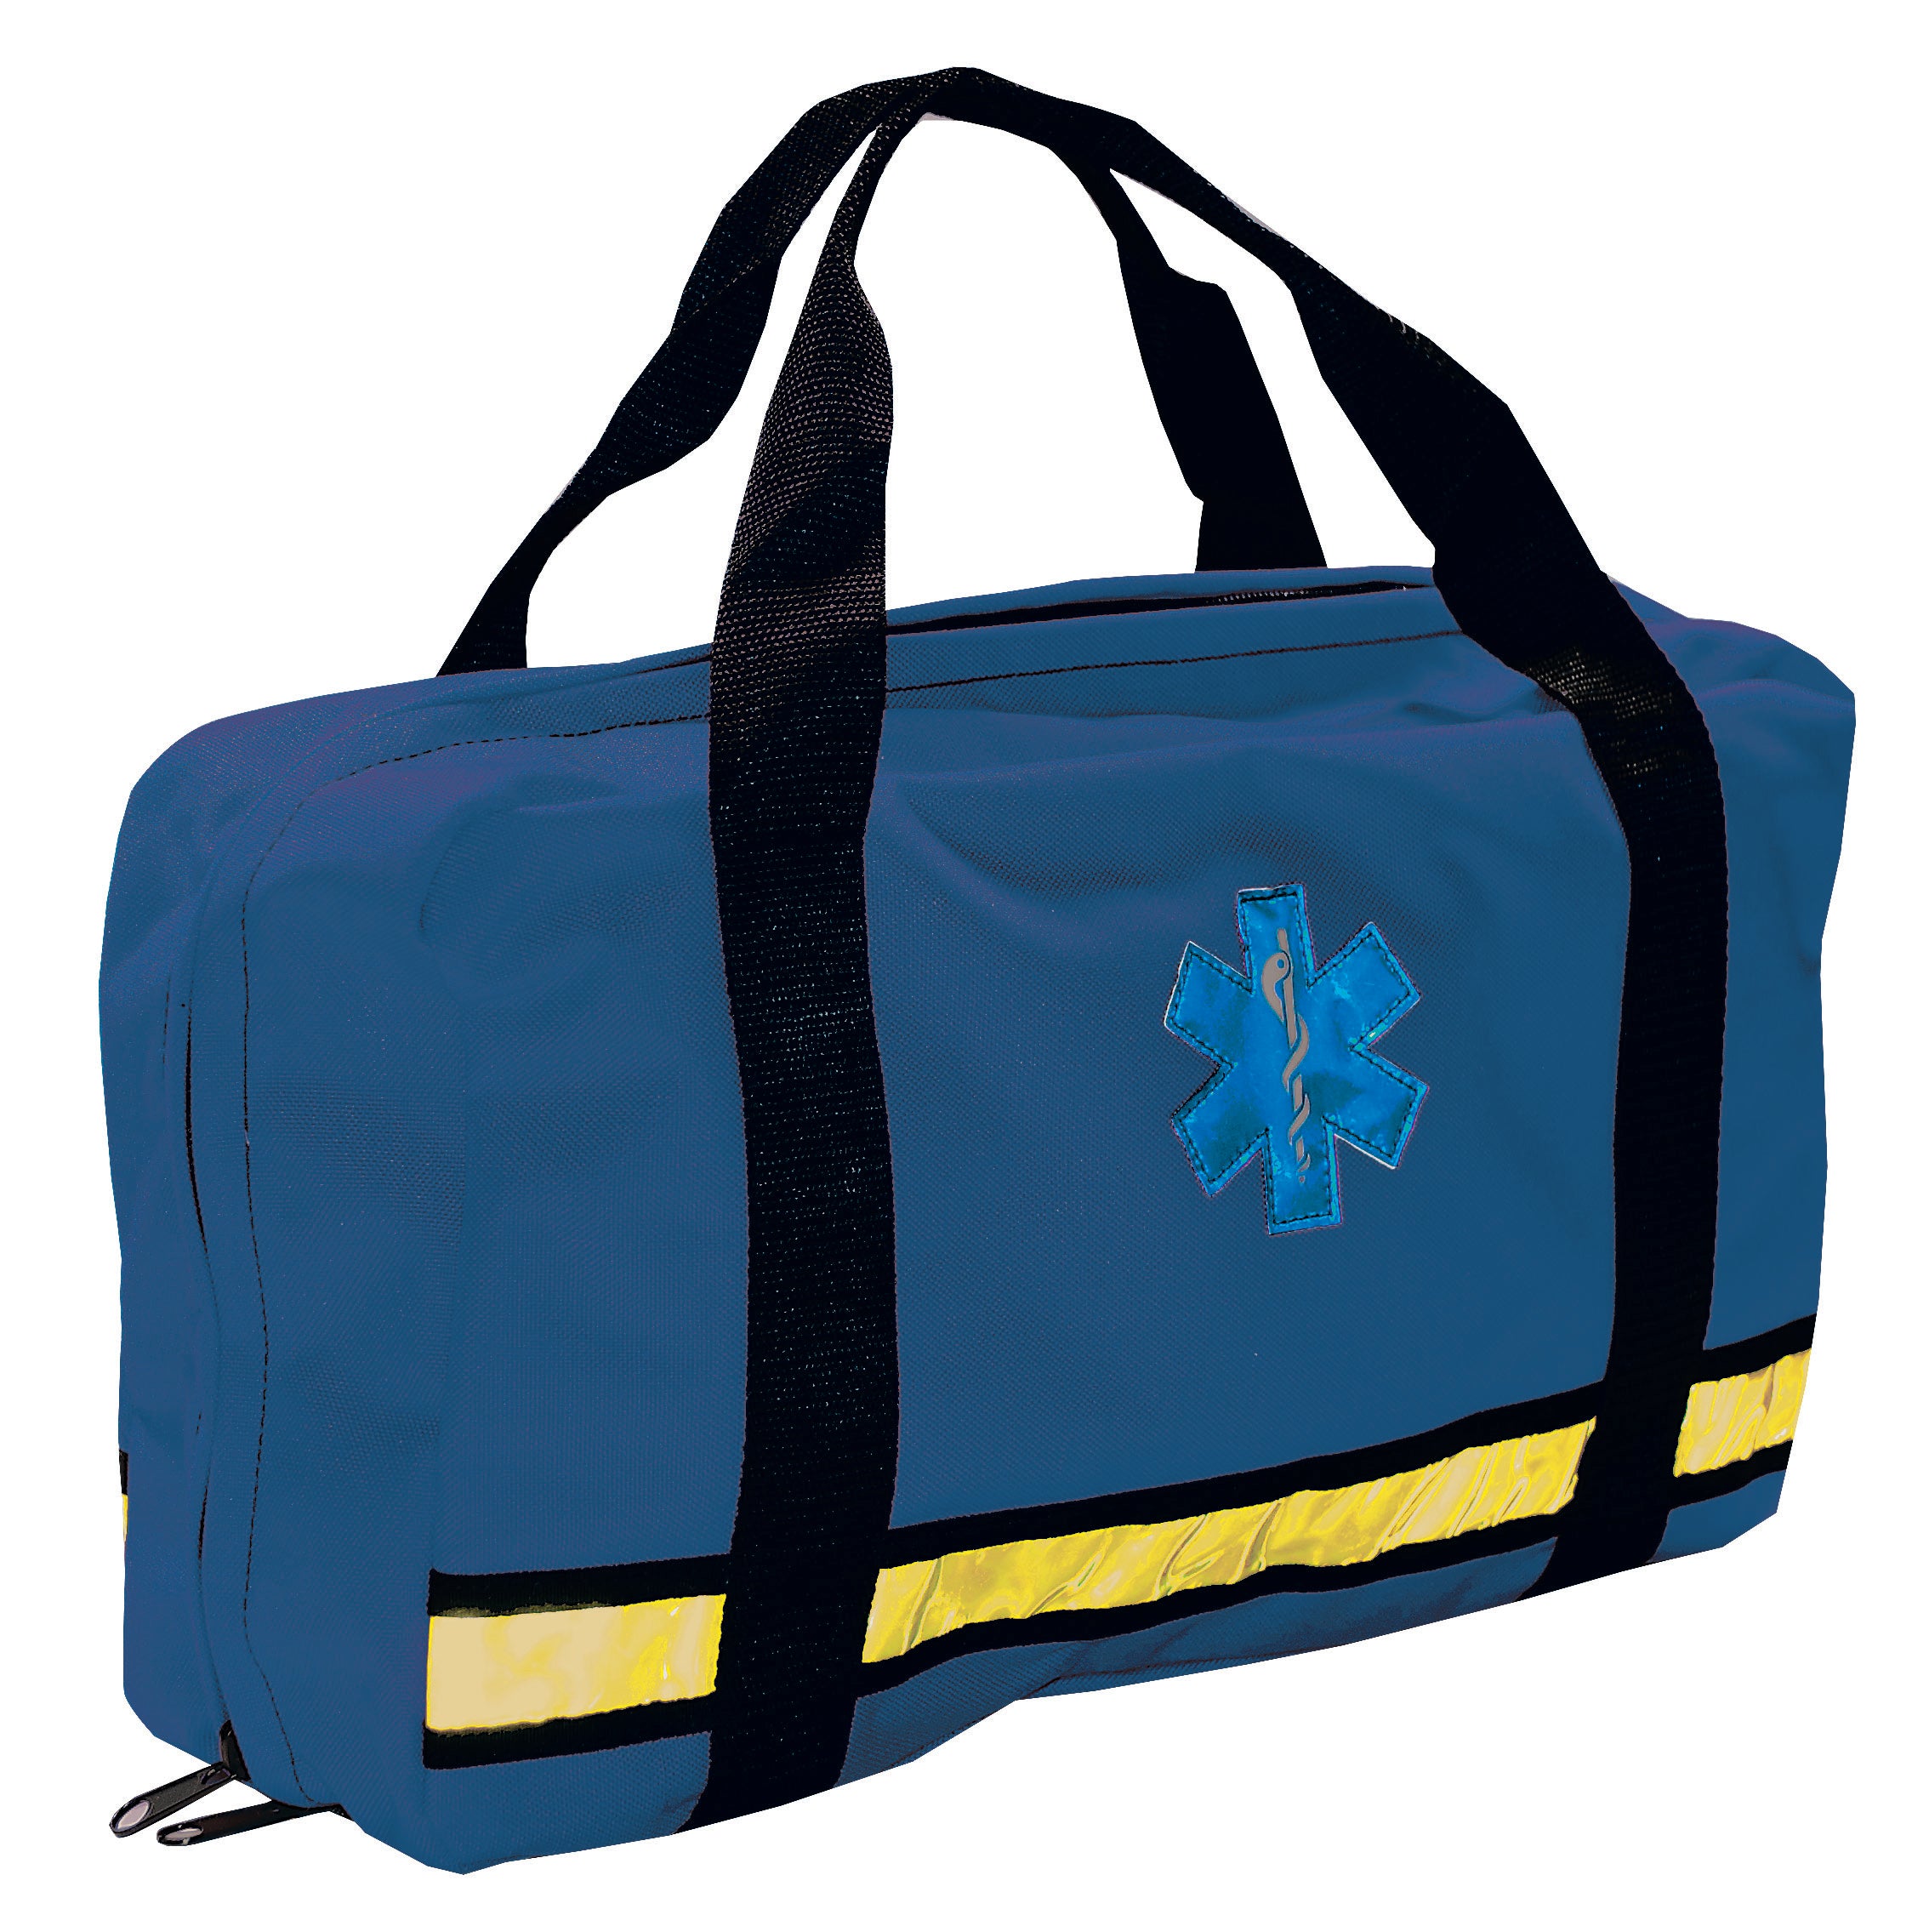 EMI Emergency Medical Flat-Pac Response Kit Bag Only - Navy